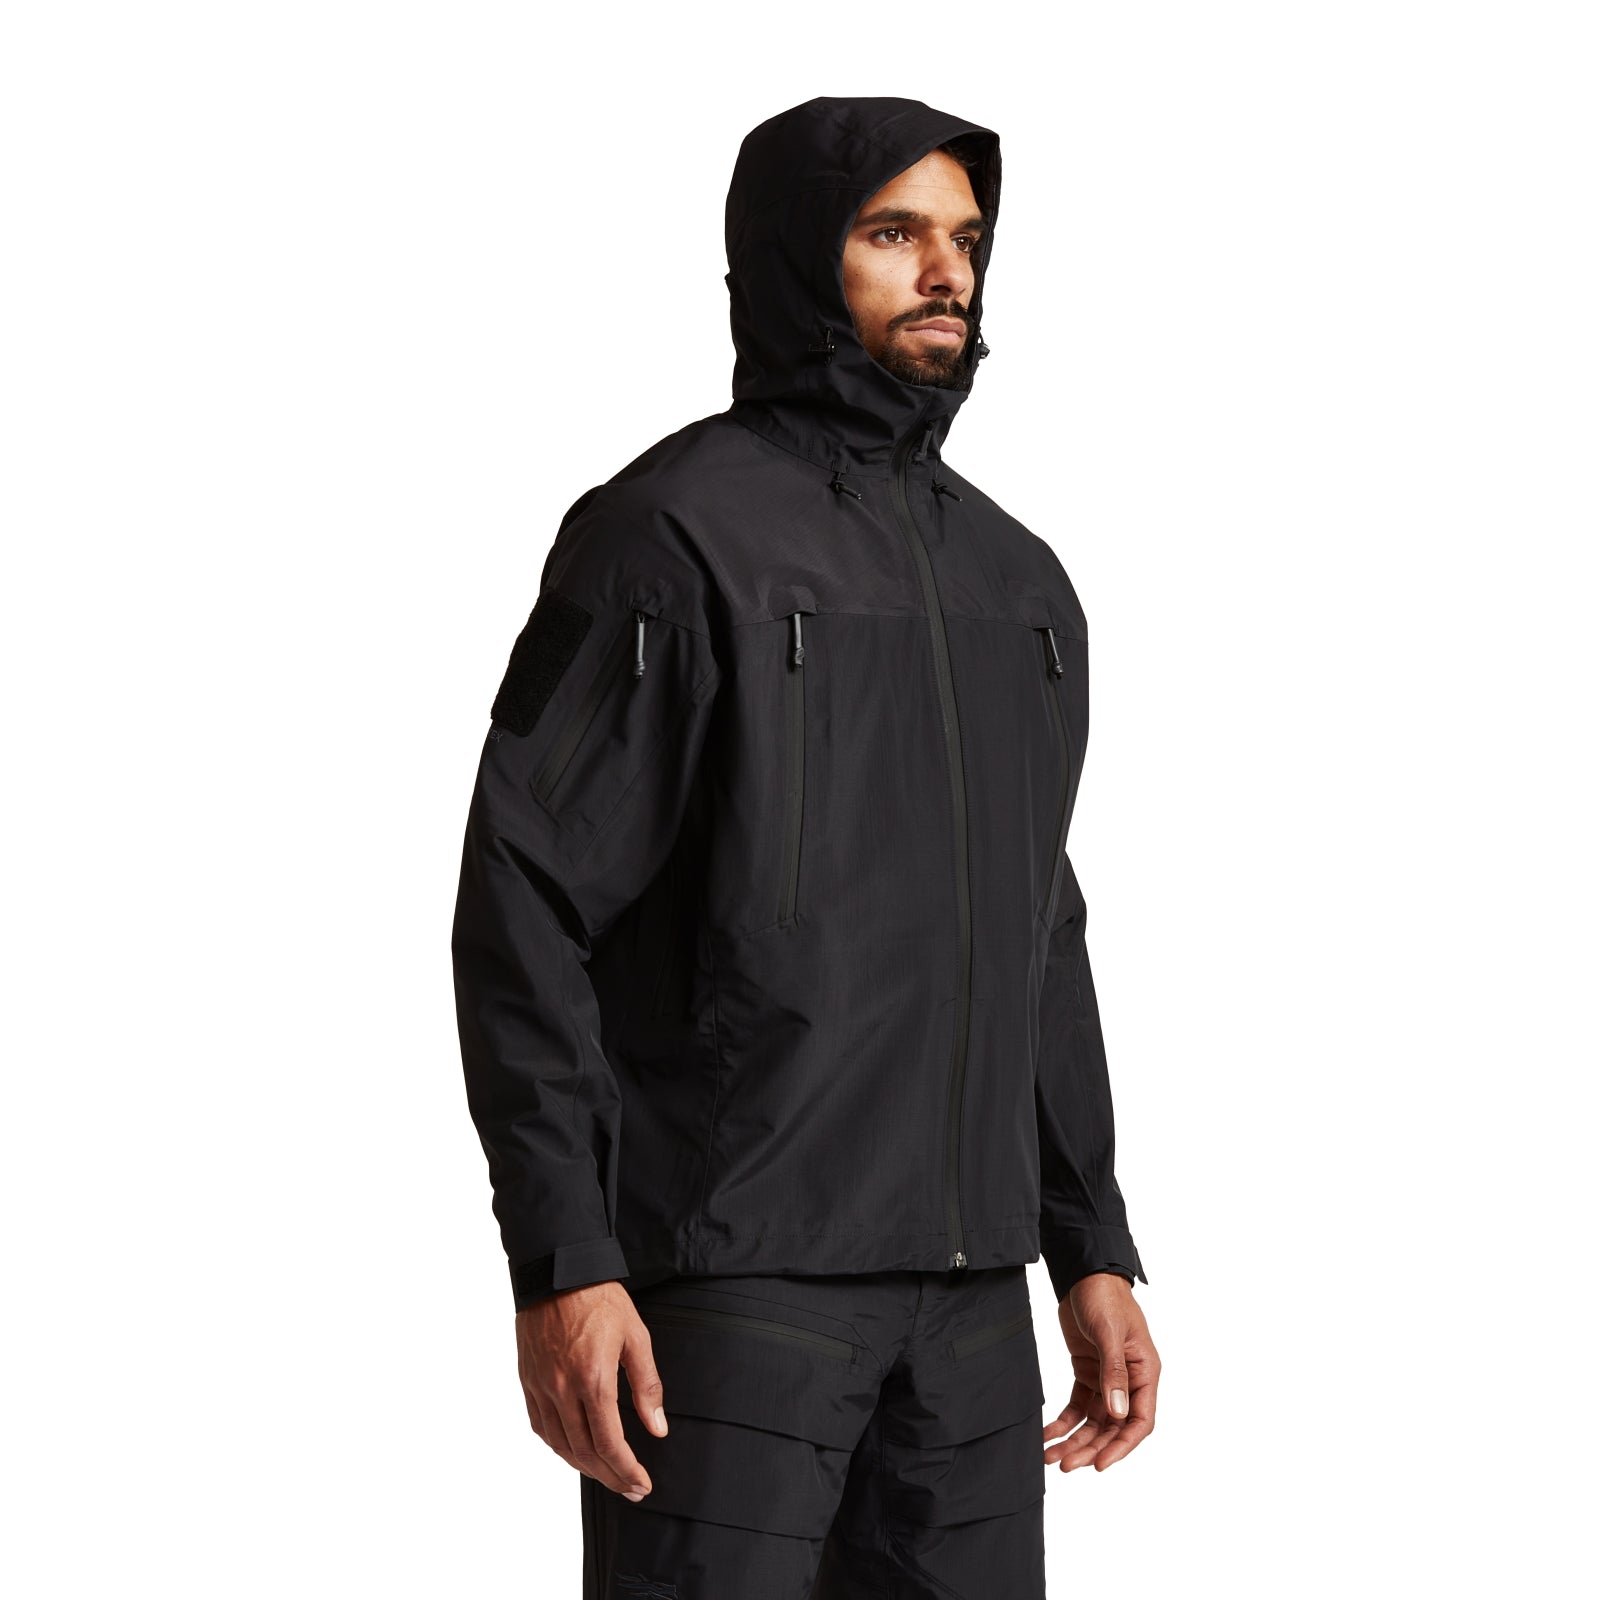 Wet Weather Protective Jacket - MDW (Black) – Arrowhead Kred